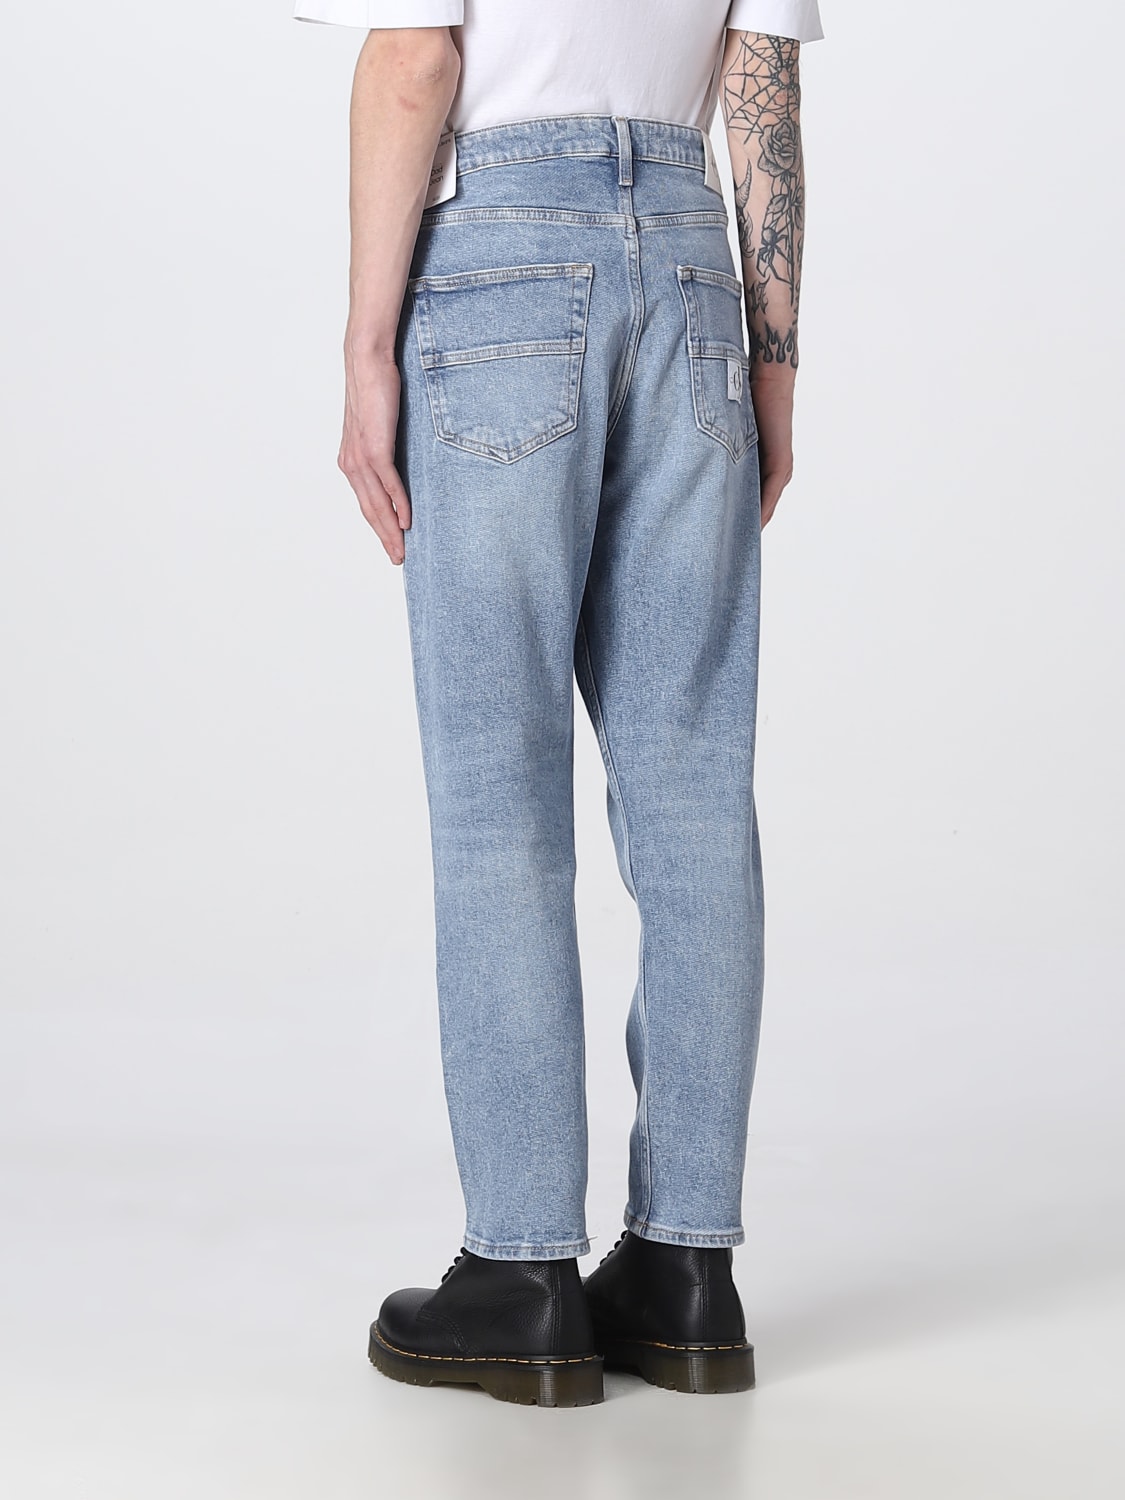 Calvin Klein Jeansアウトレット：ジーンズ メンズ - デニム | GIGLIO